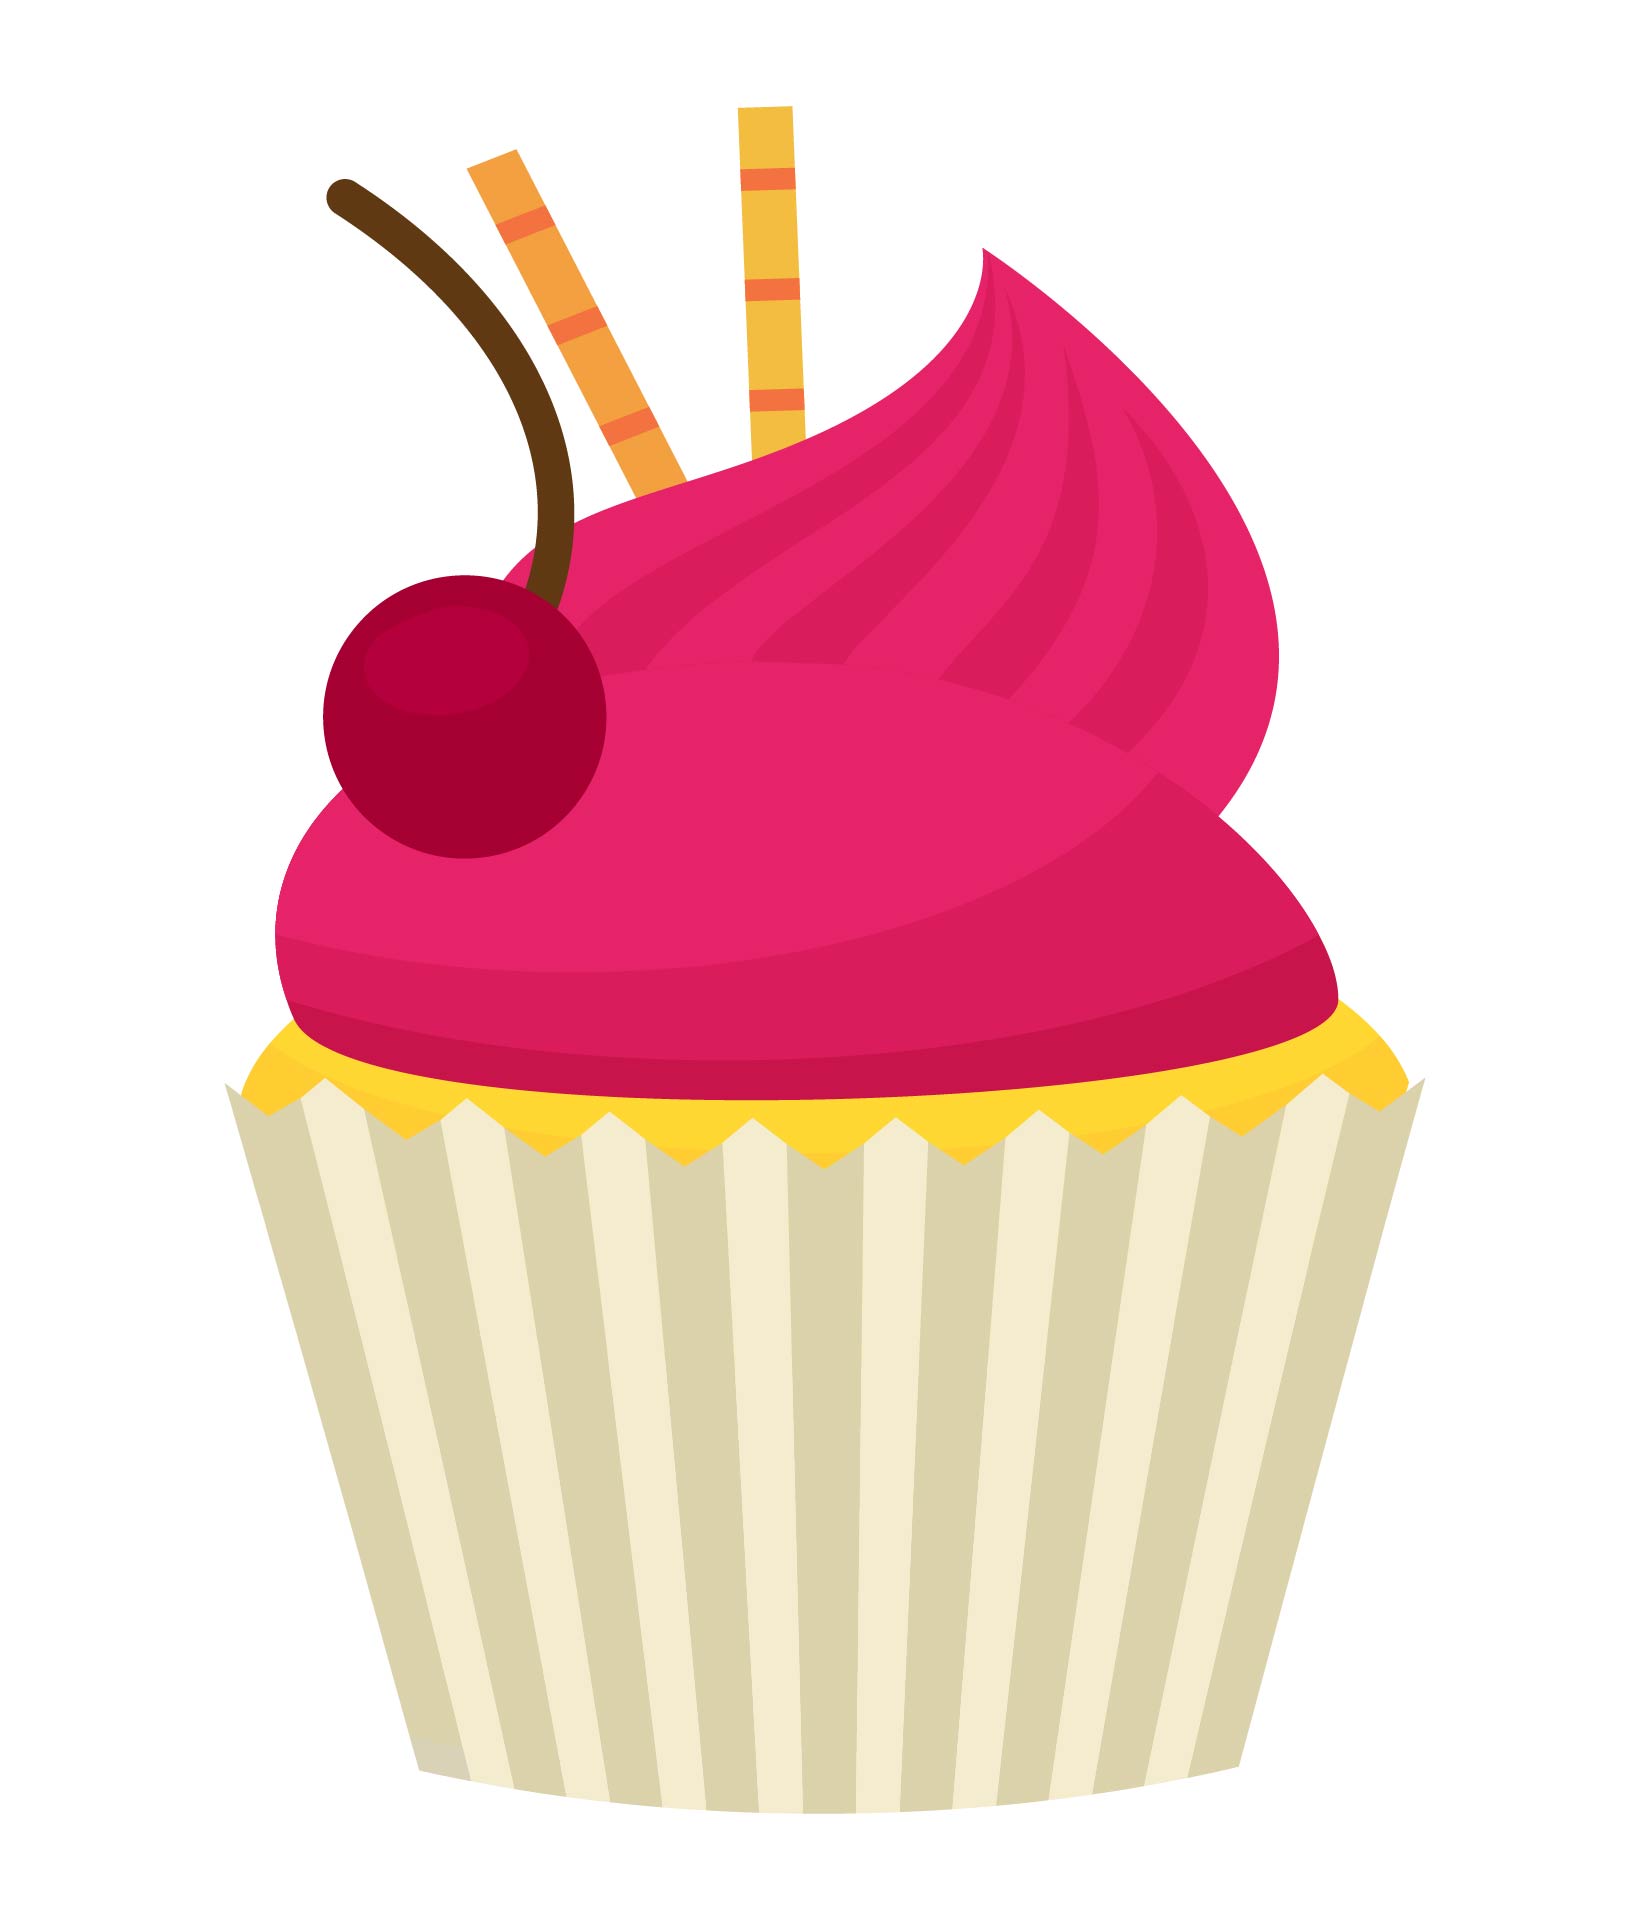 Happy Birthday Cupcake Printables Customize And Print